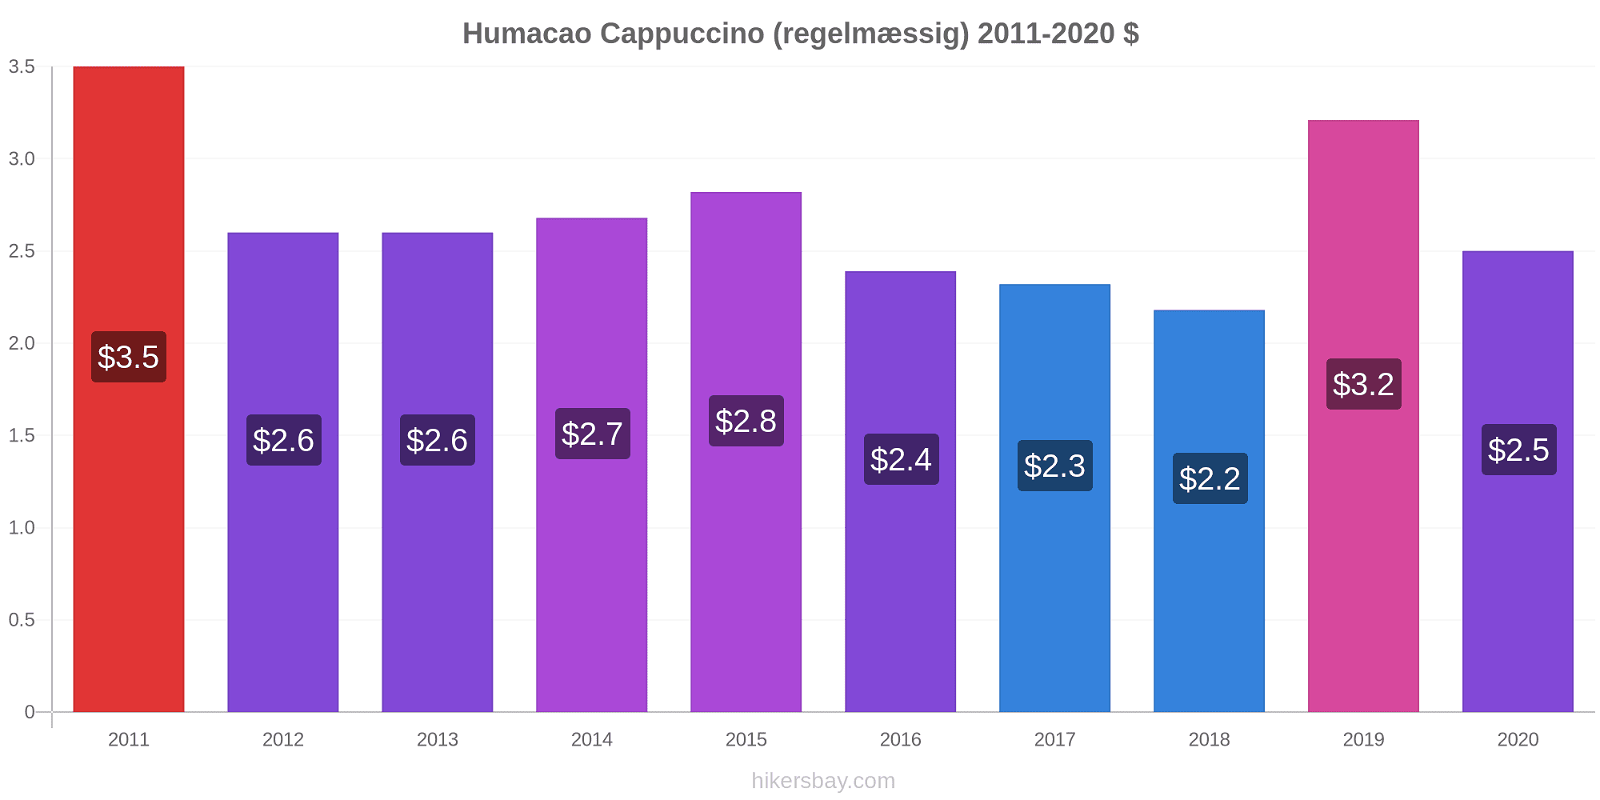 Humacao prisændringer Cappuccino (regelmæssig) hikersbay.com